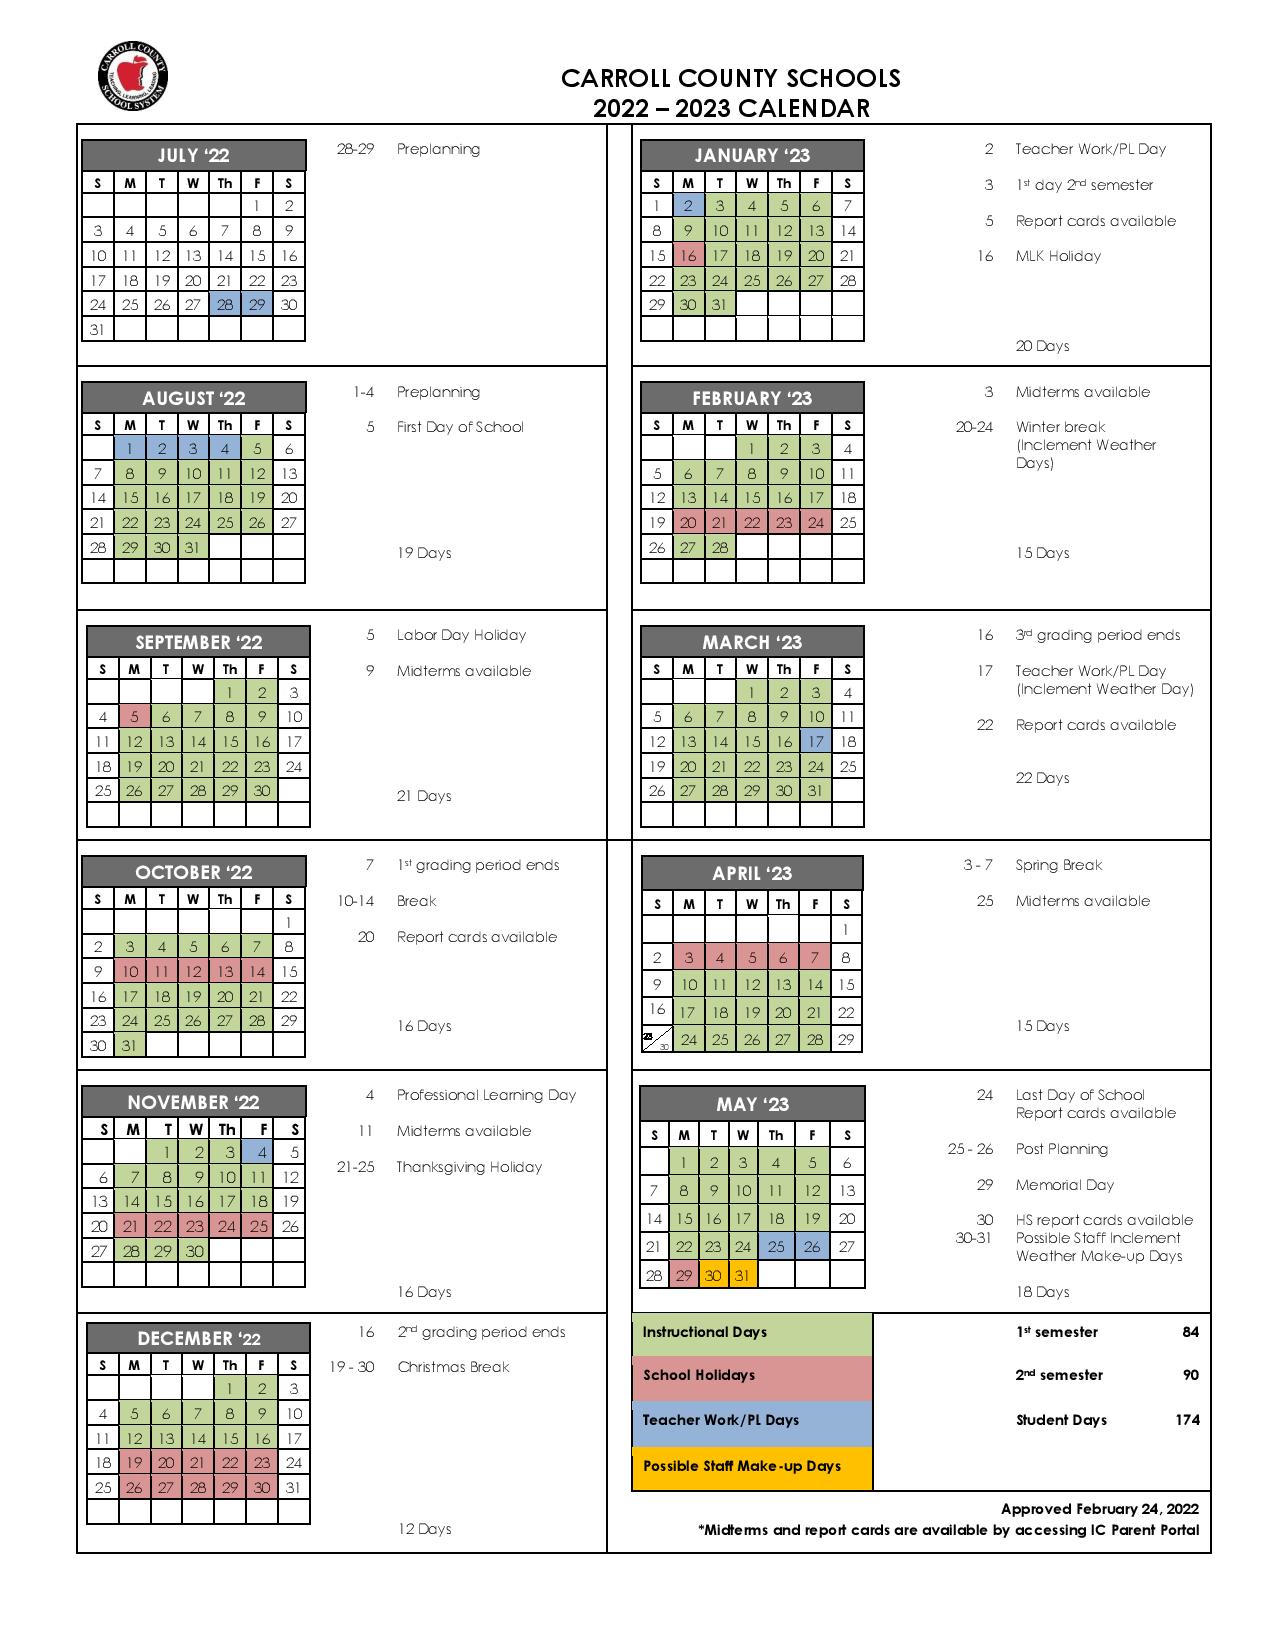 carroll-county-schools-calendar-2022-2023-in-pdf